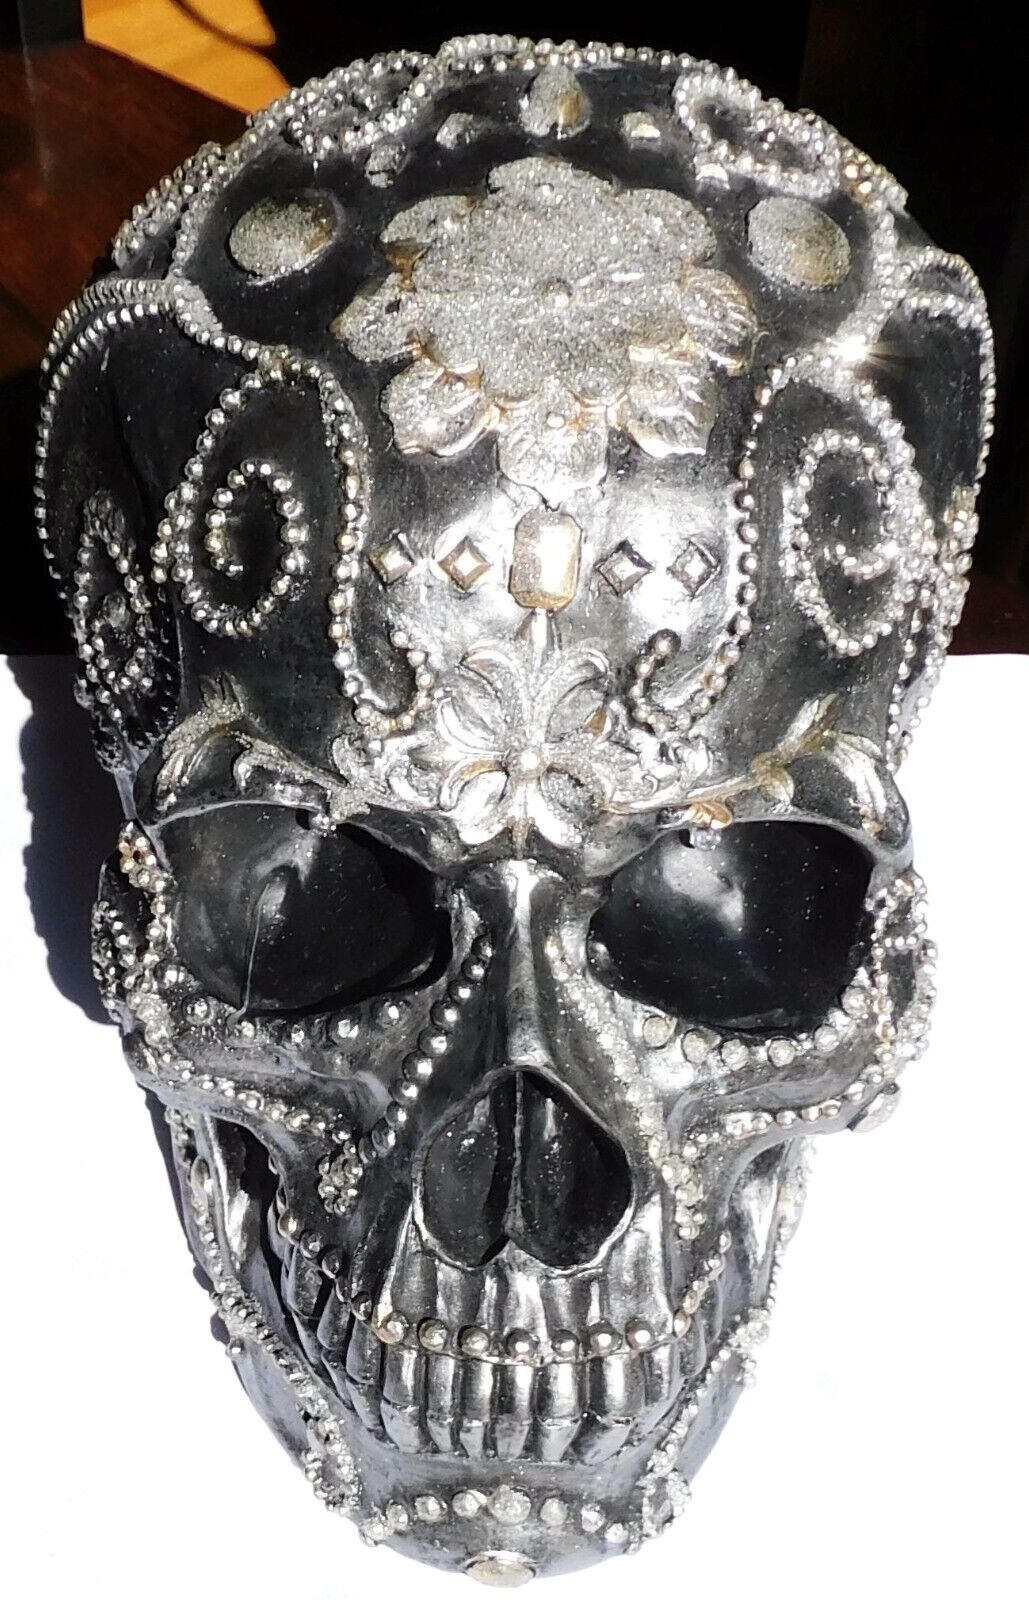 Skull Halloween Decoration Ornate Detailed Dark Cool 10x7x7\